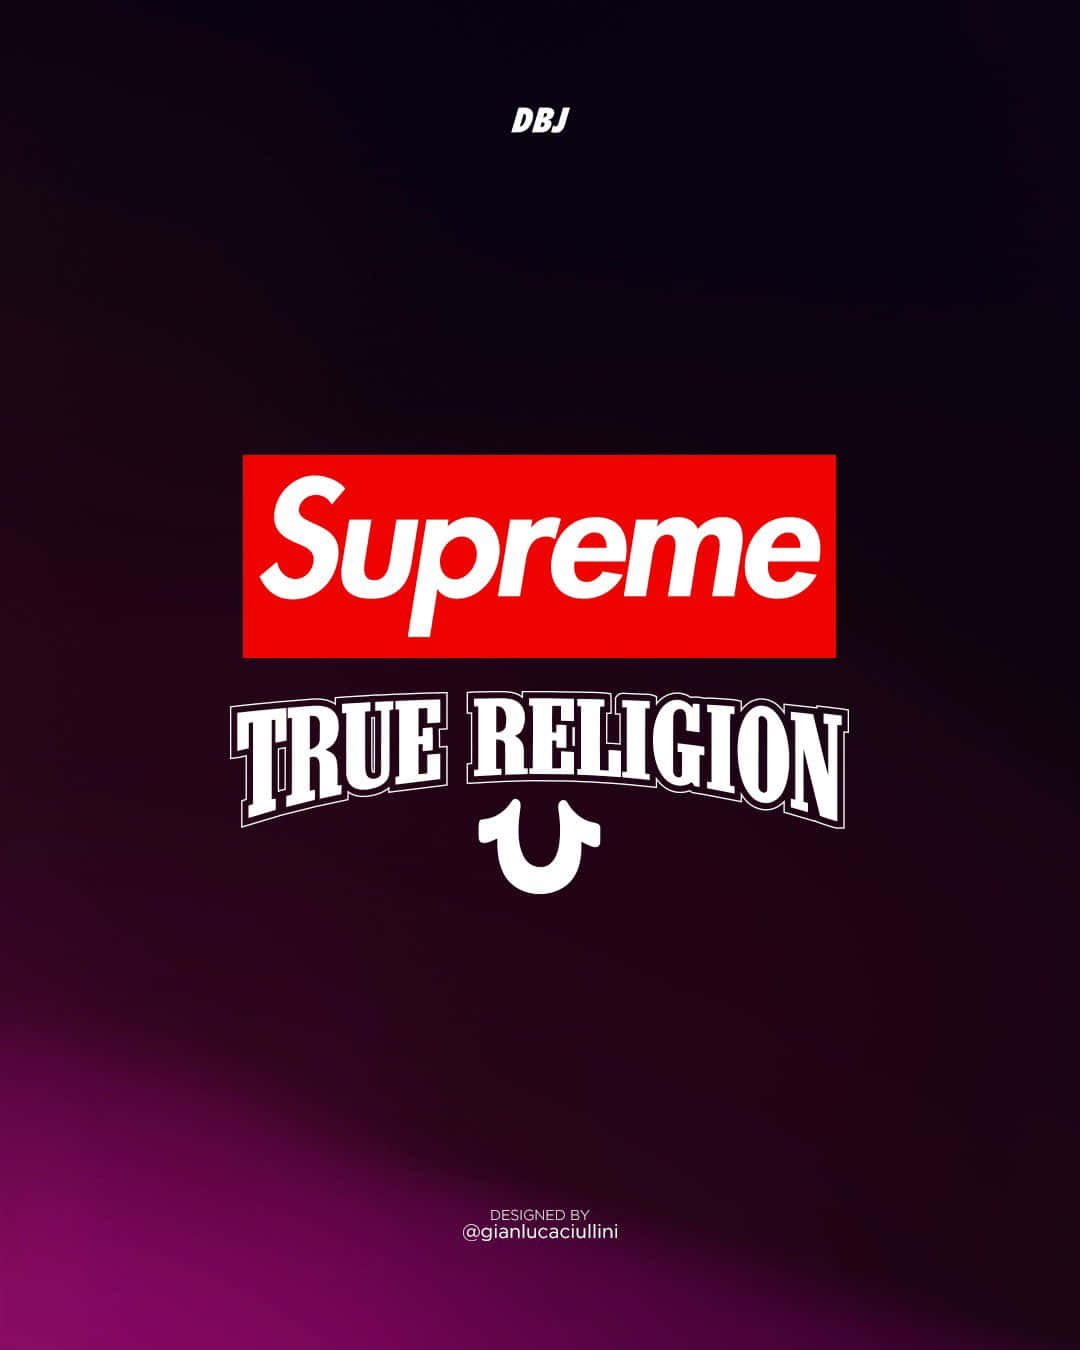 True Religion - Premium Denim Crafted with Unrivaled Quality Wallpaper